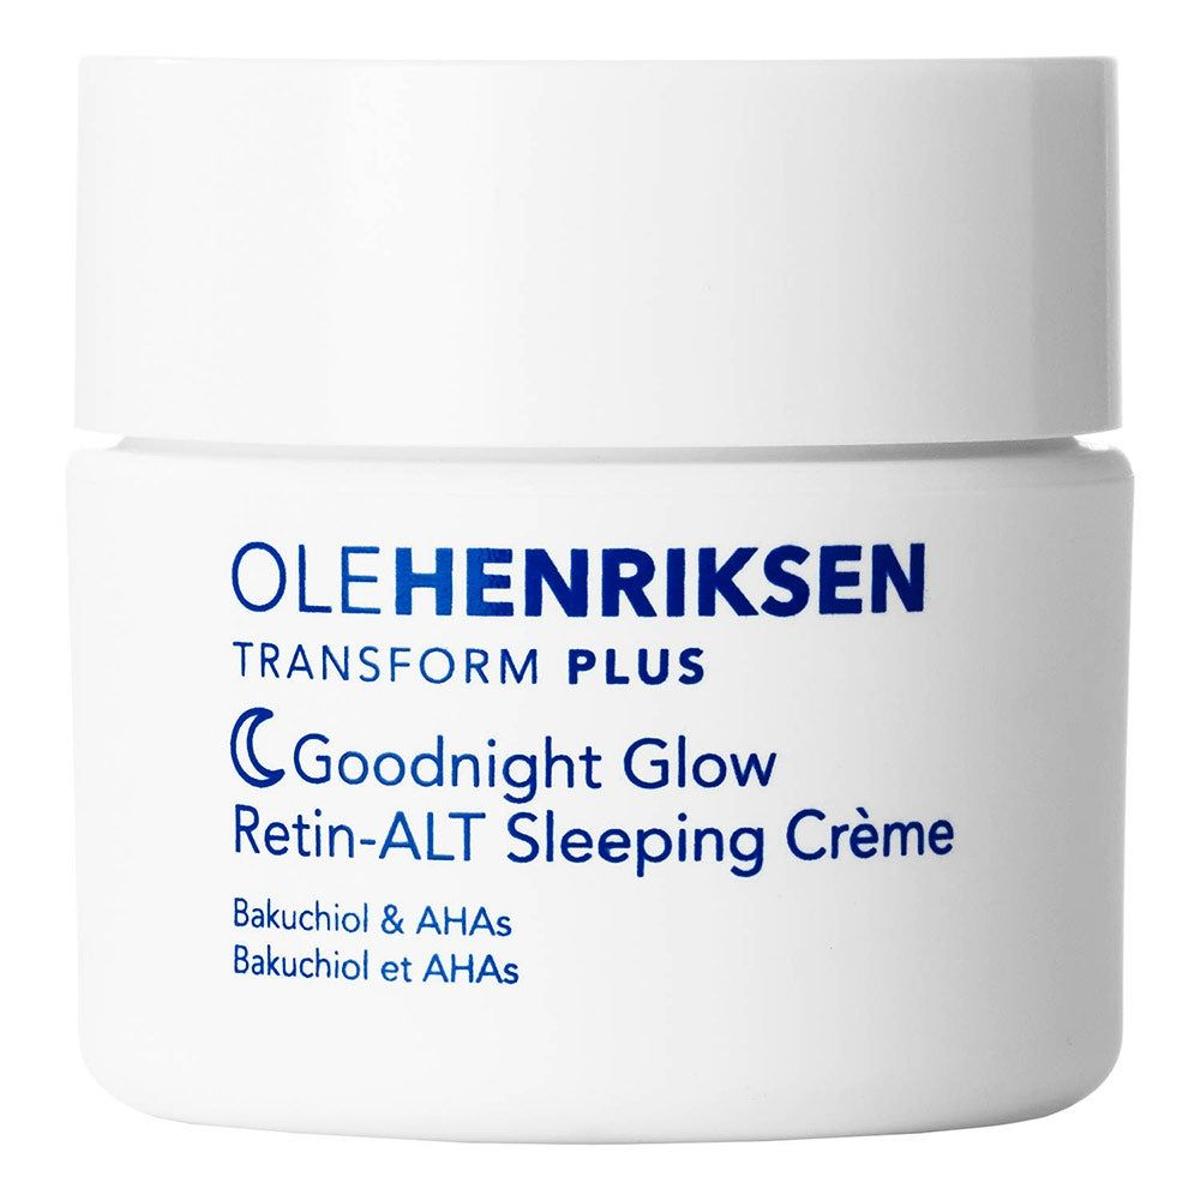 Goodnight Glow Retin-ALT Sleeping Crème OLEHENRIKSEN (precio: 51,95 euros)